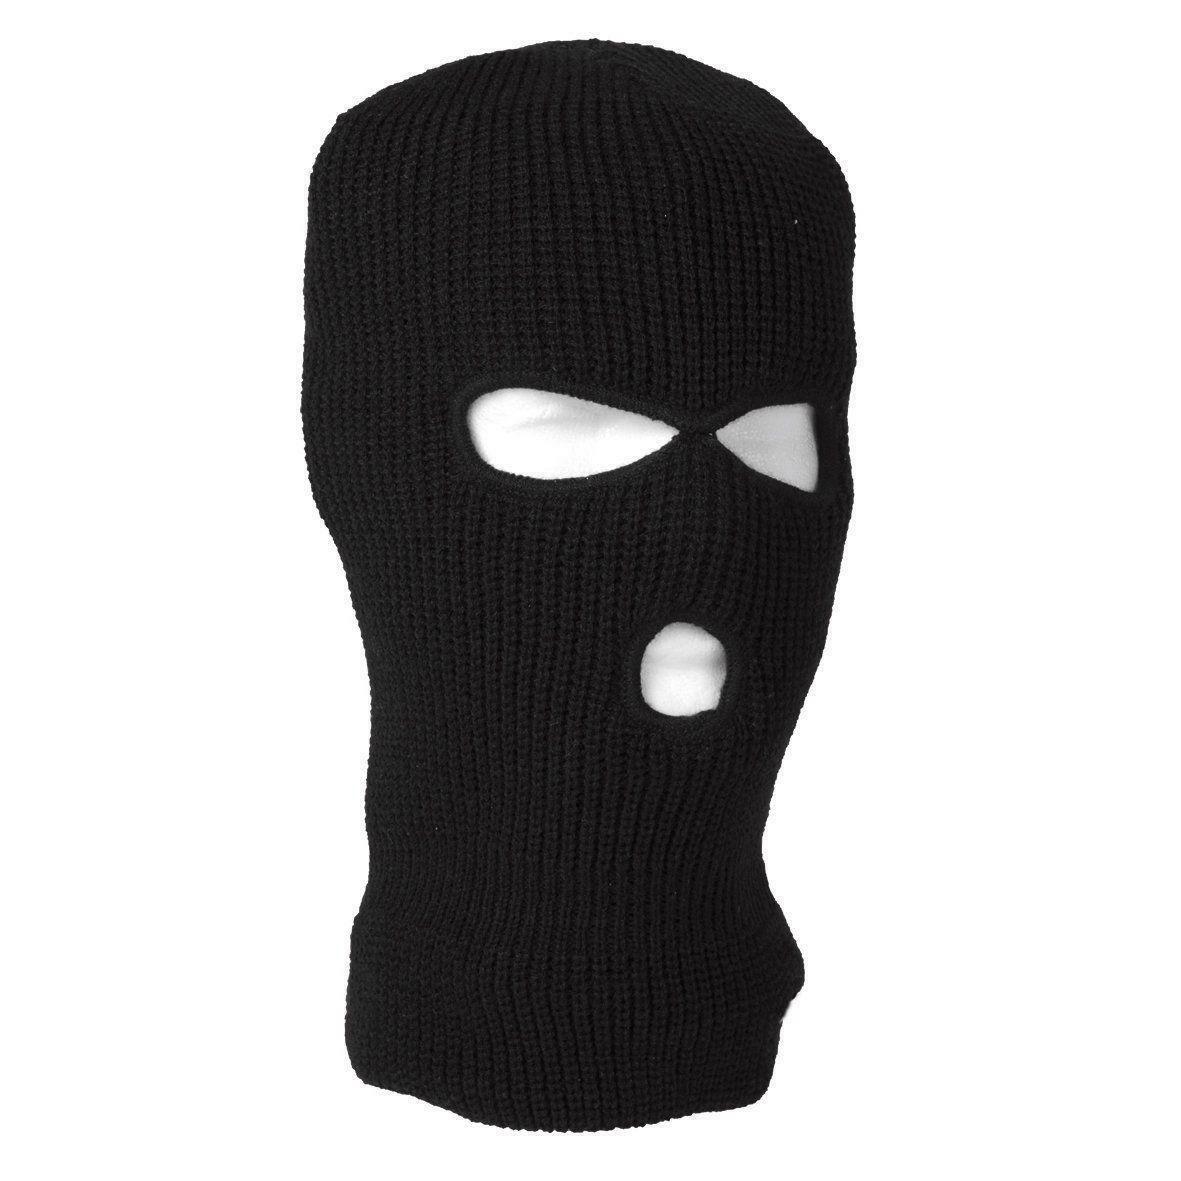 Black Balaclava Mask Warm 3 Hole Winter SAS Styled Army Ski Hat Neck ...